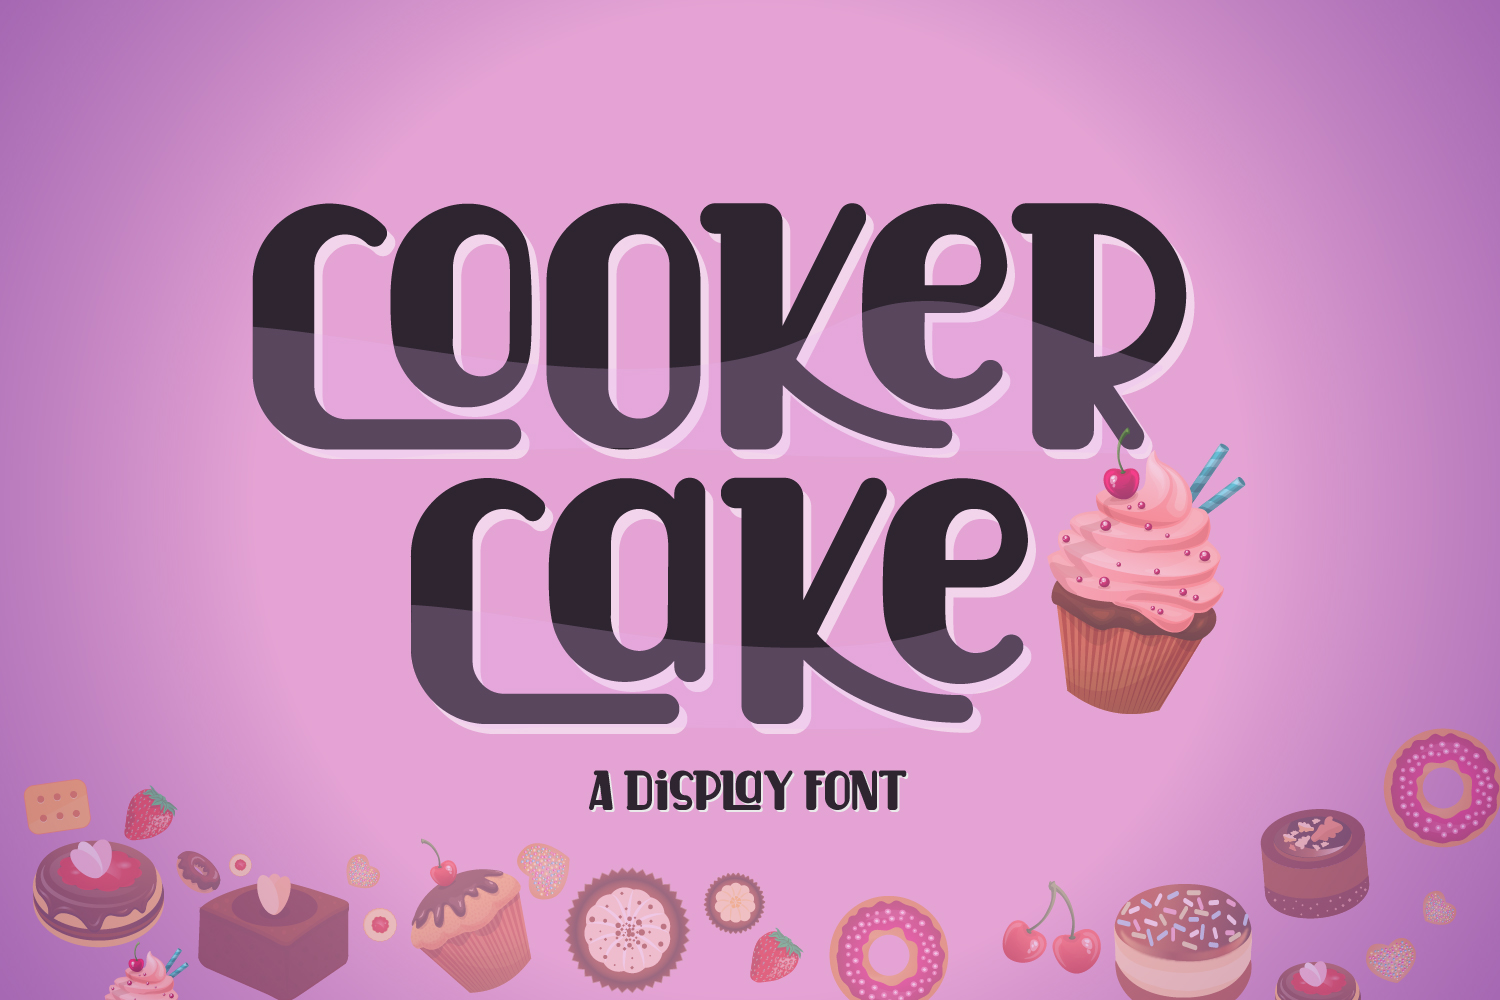 Cooker Cake Demo